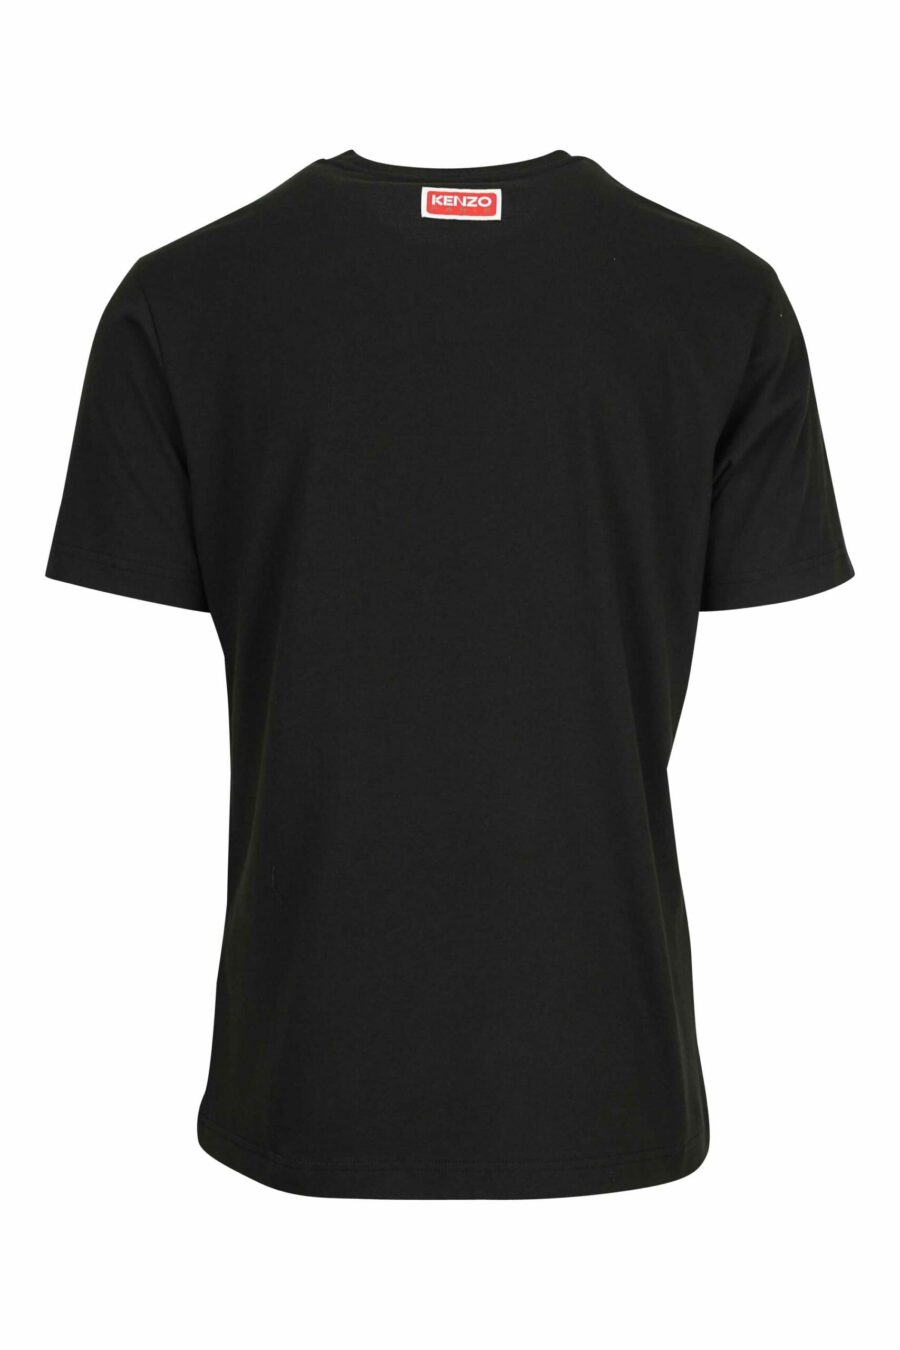 T-shirt noir avec mini logo "kenzo elephant" - 3612230625365 1 scaled